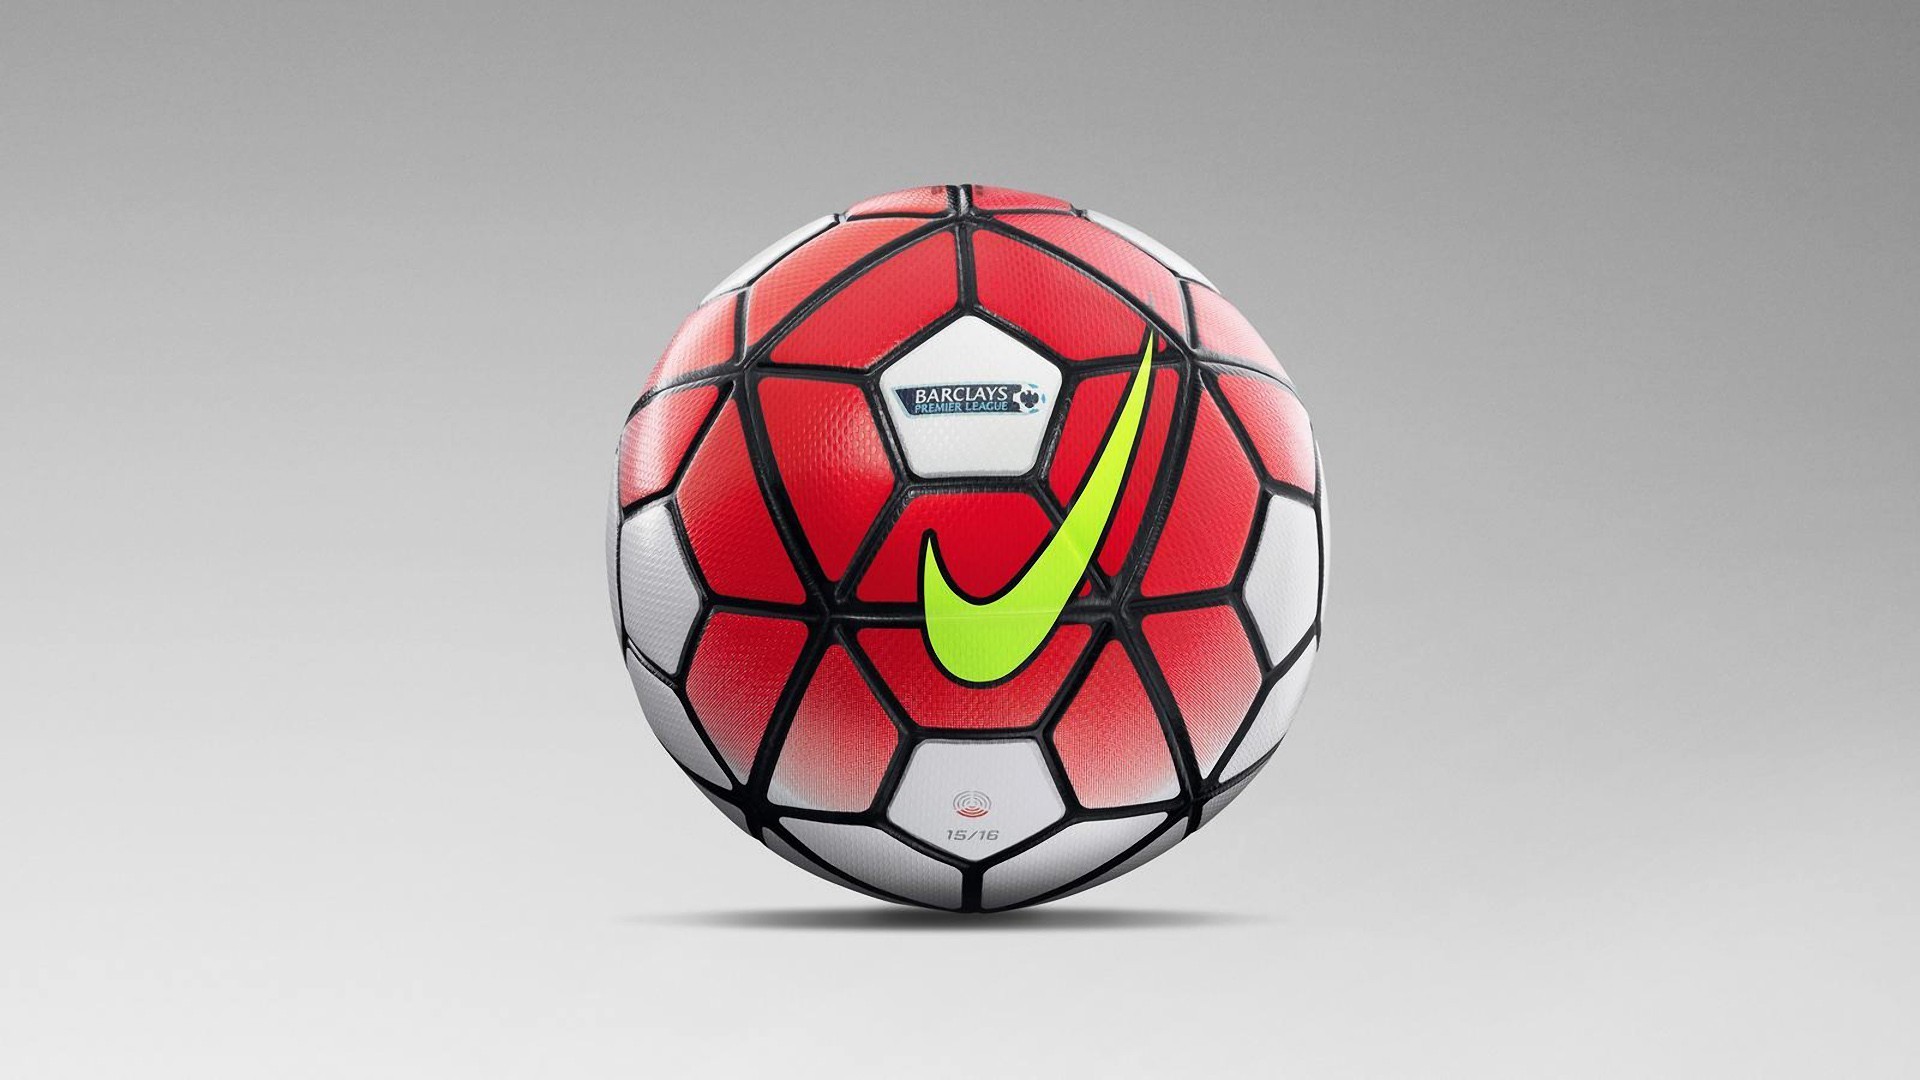 1920x1080  Nike Ordem 3 Barclays Premier League 2015-2016 Ball Wallpaper free